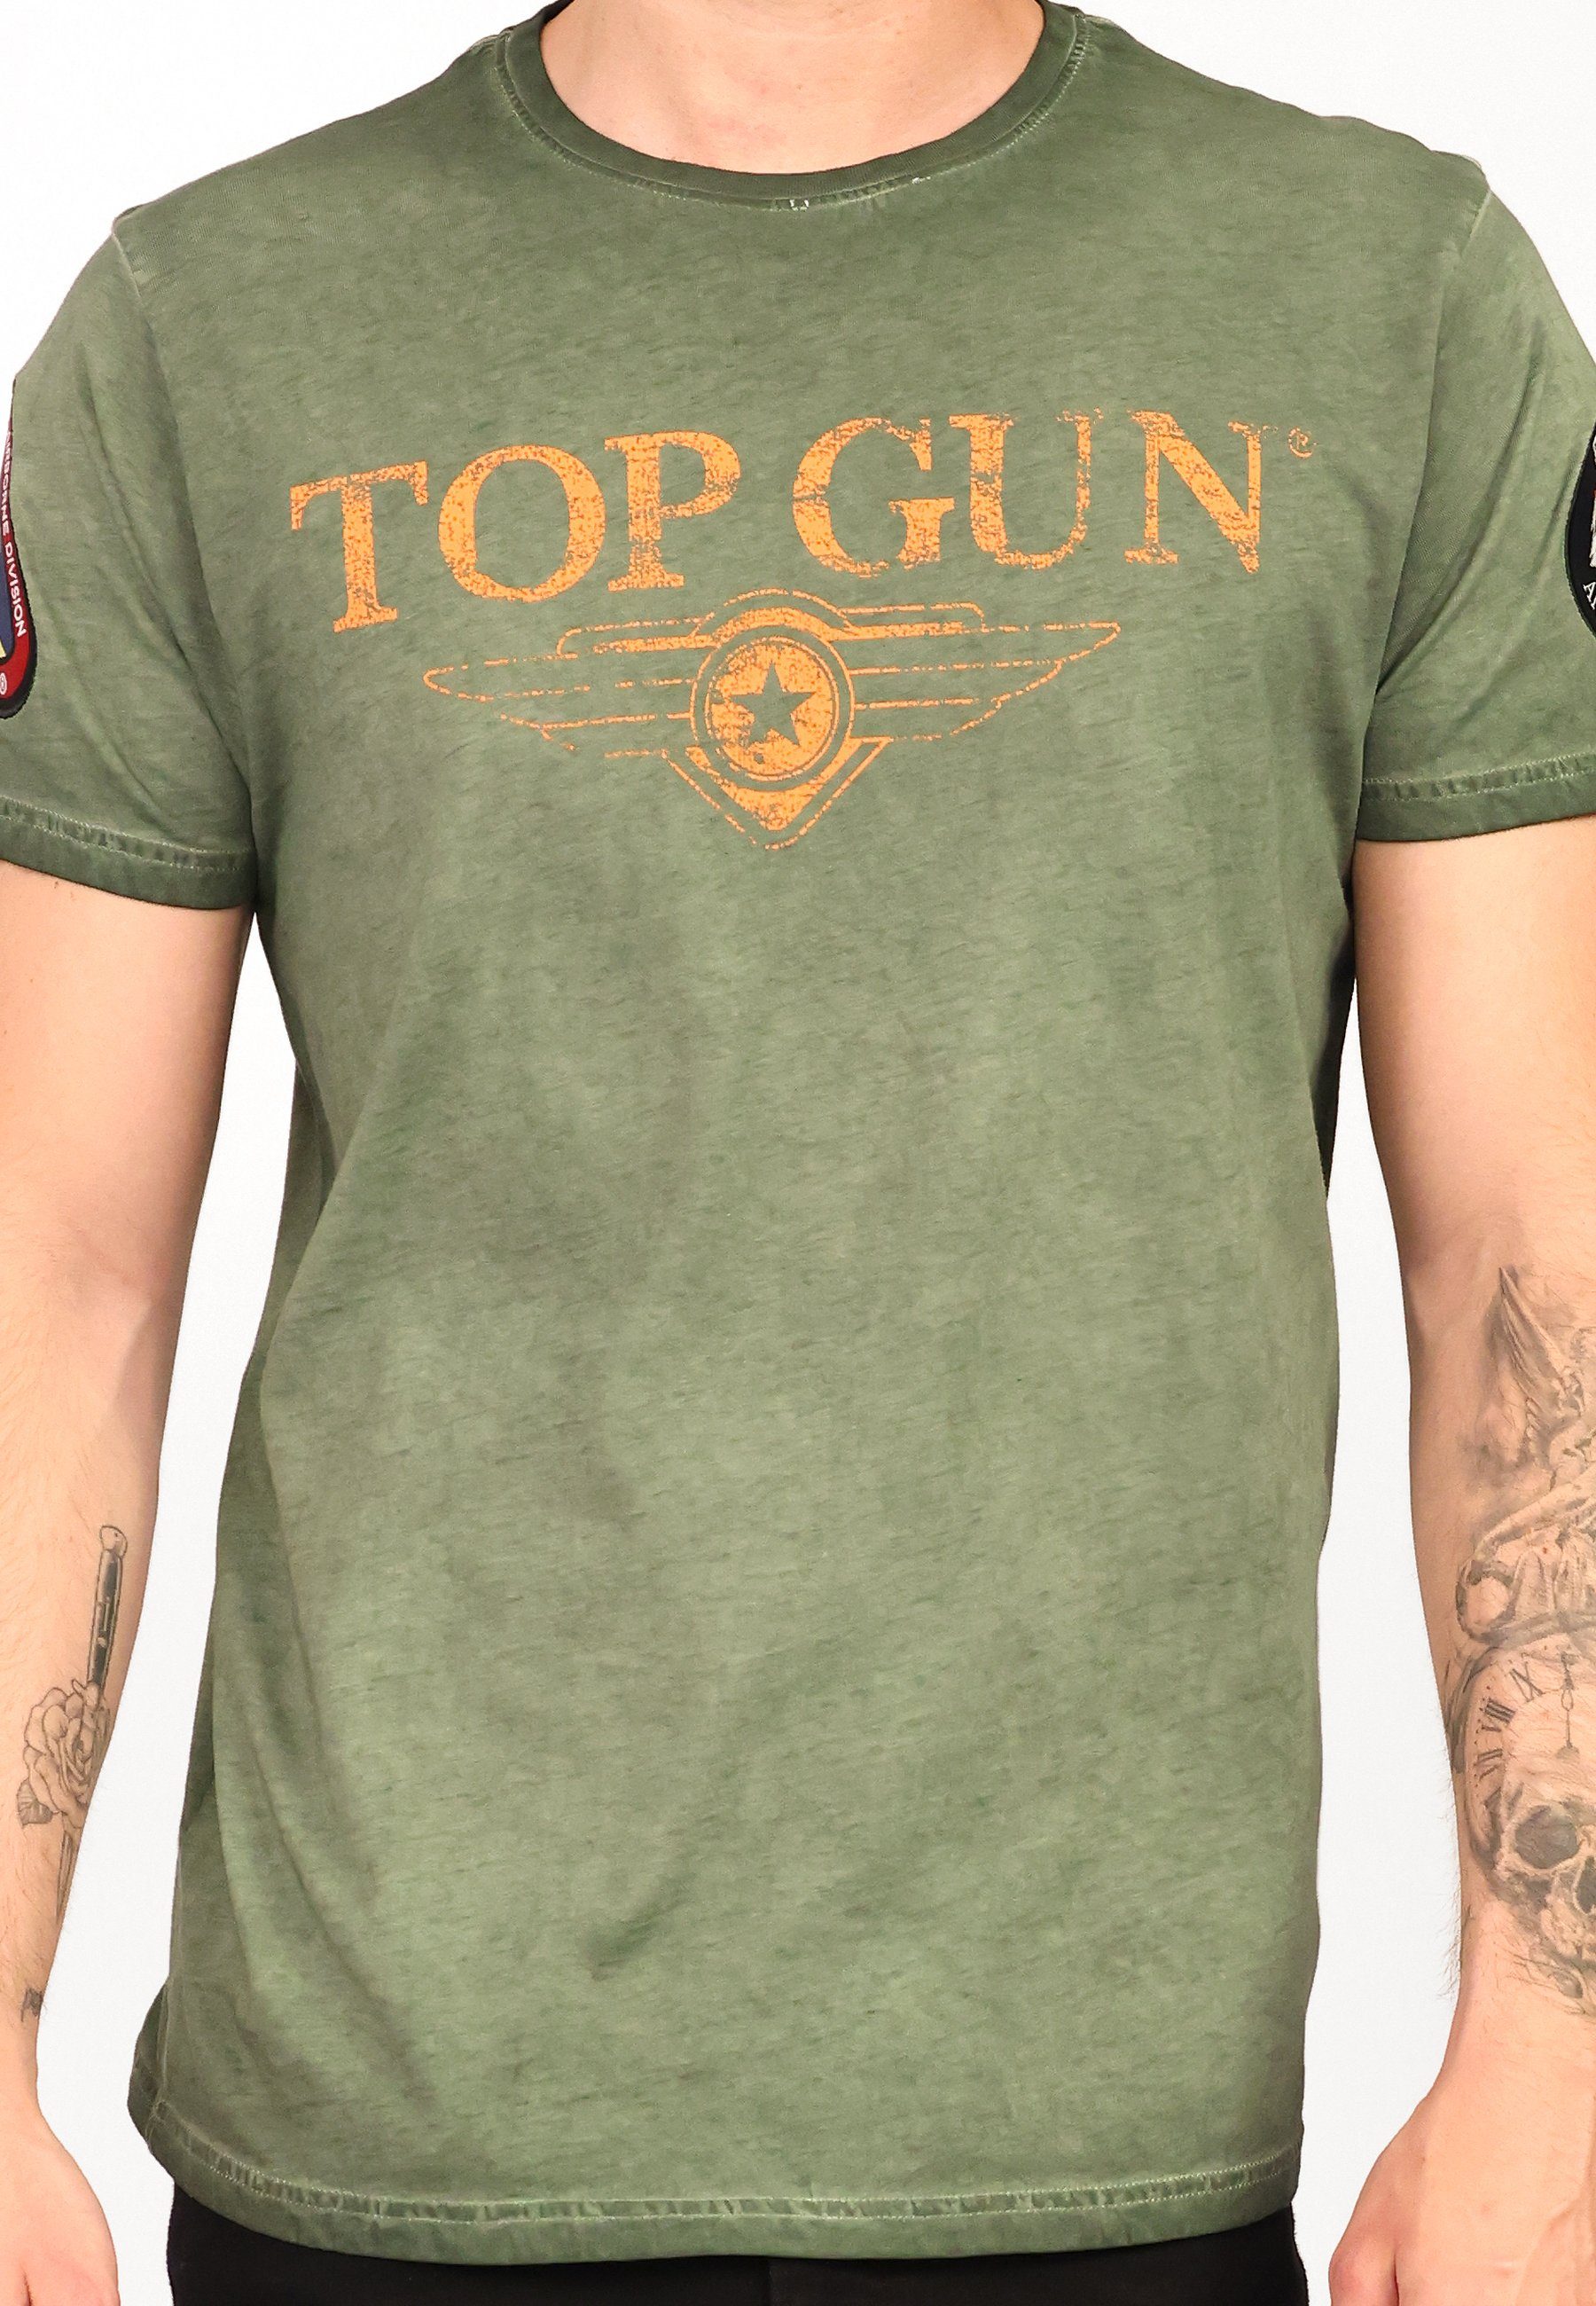 T-Shirt olive GUN TOP TG20213001